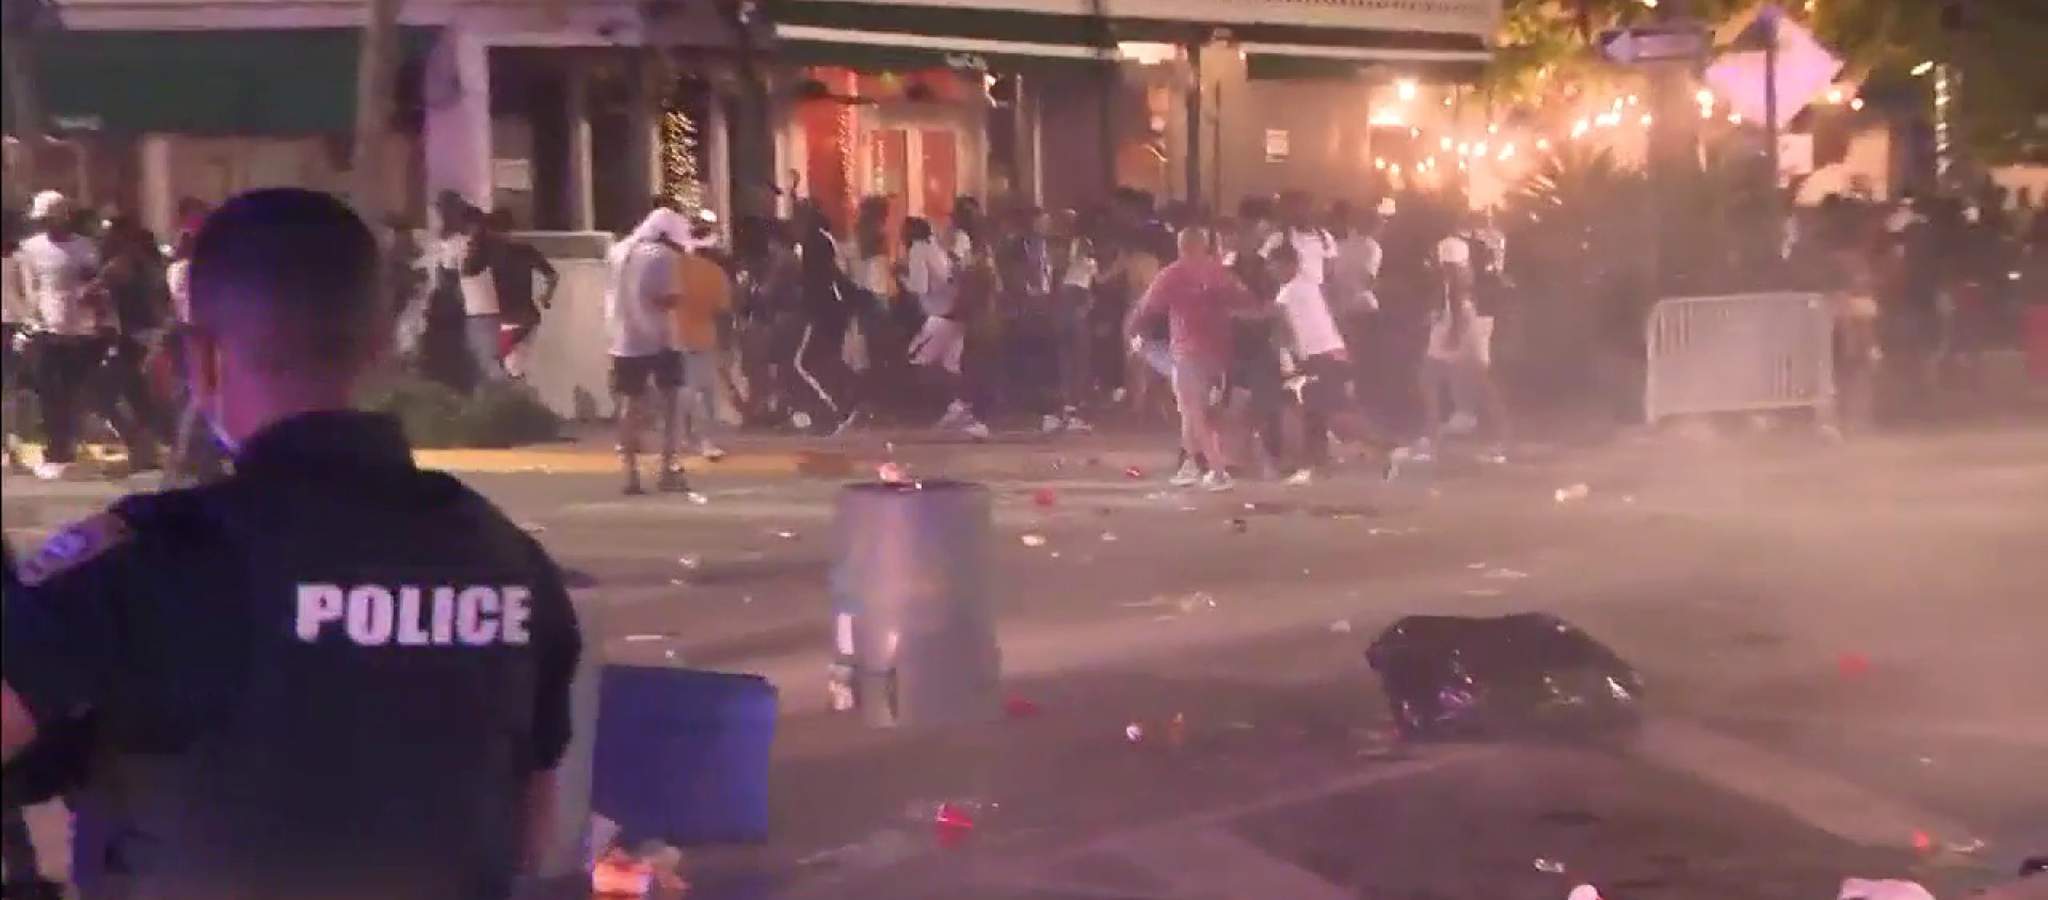 Officers fire pepper balls at spring break partygoers breaking curfew in Miami Beach